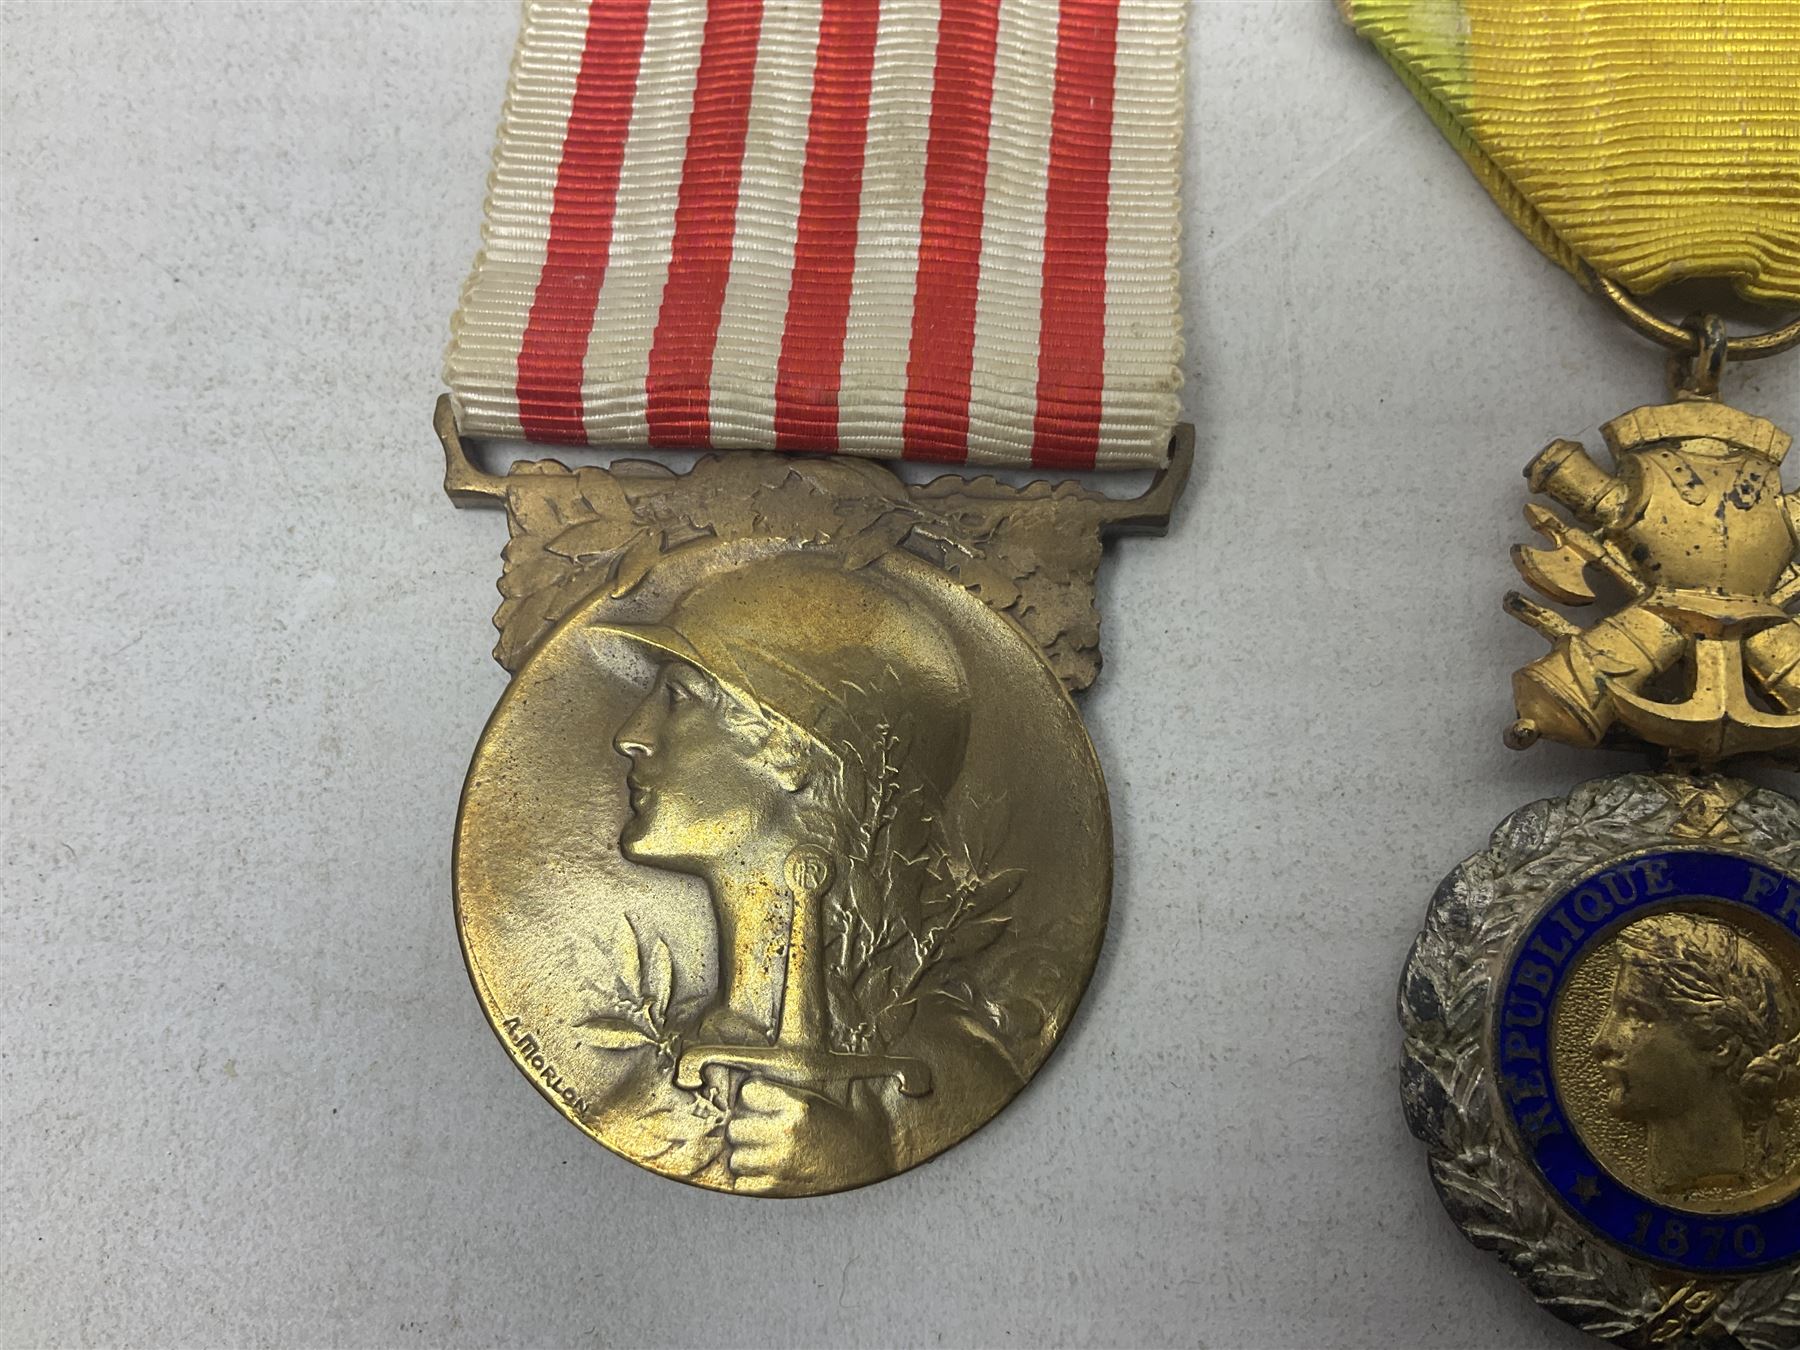 Six French medals - 2nd Empire Louis-Naploeon Medaille Militaire Valeur Et Discipline; 1870 3rd Repu - Image 9 of 10